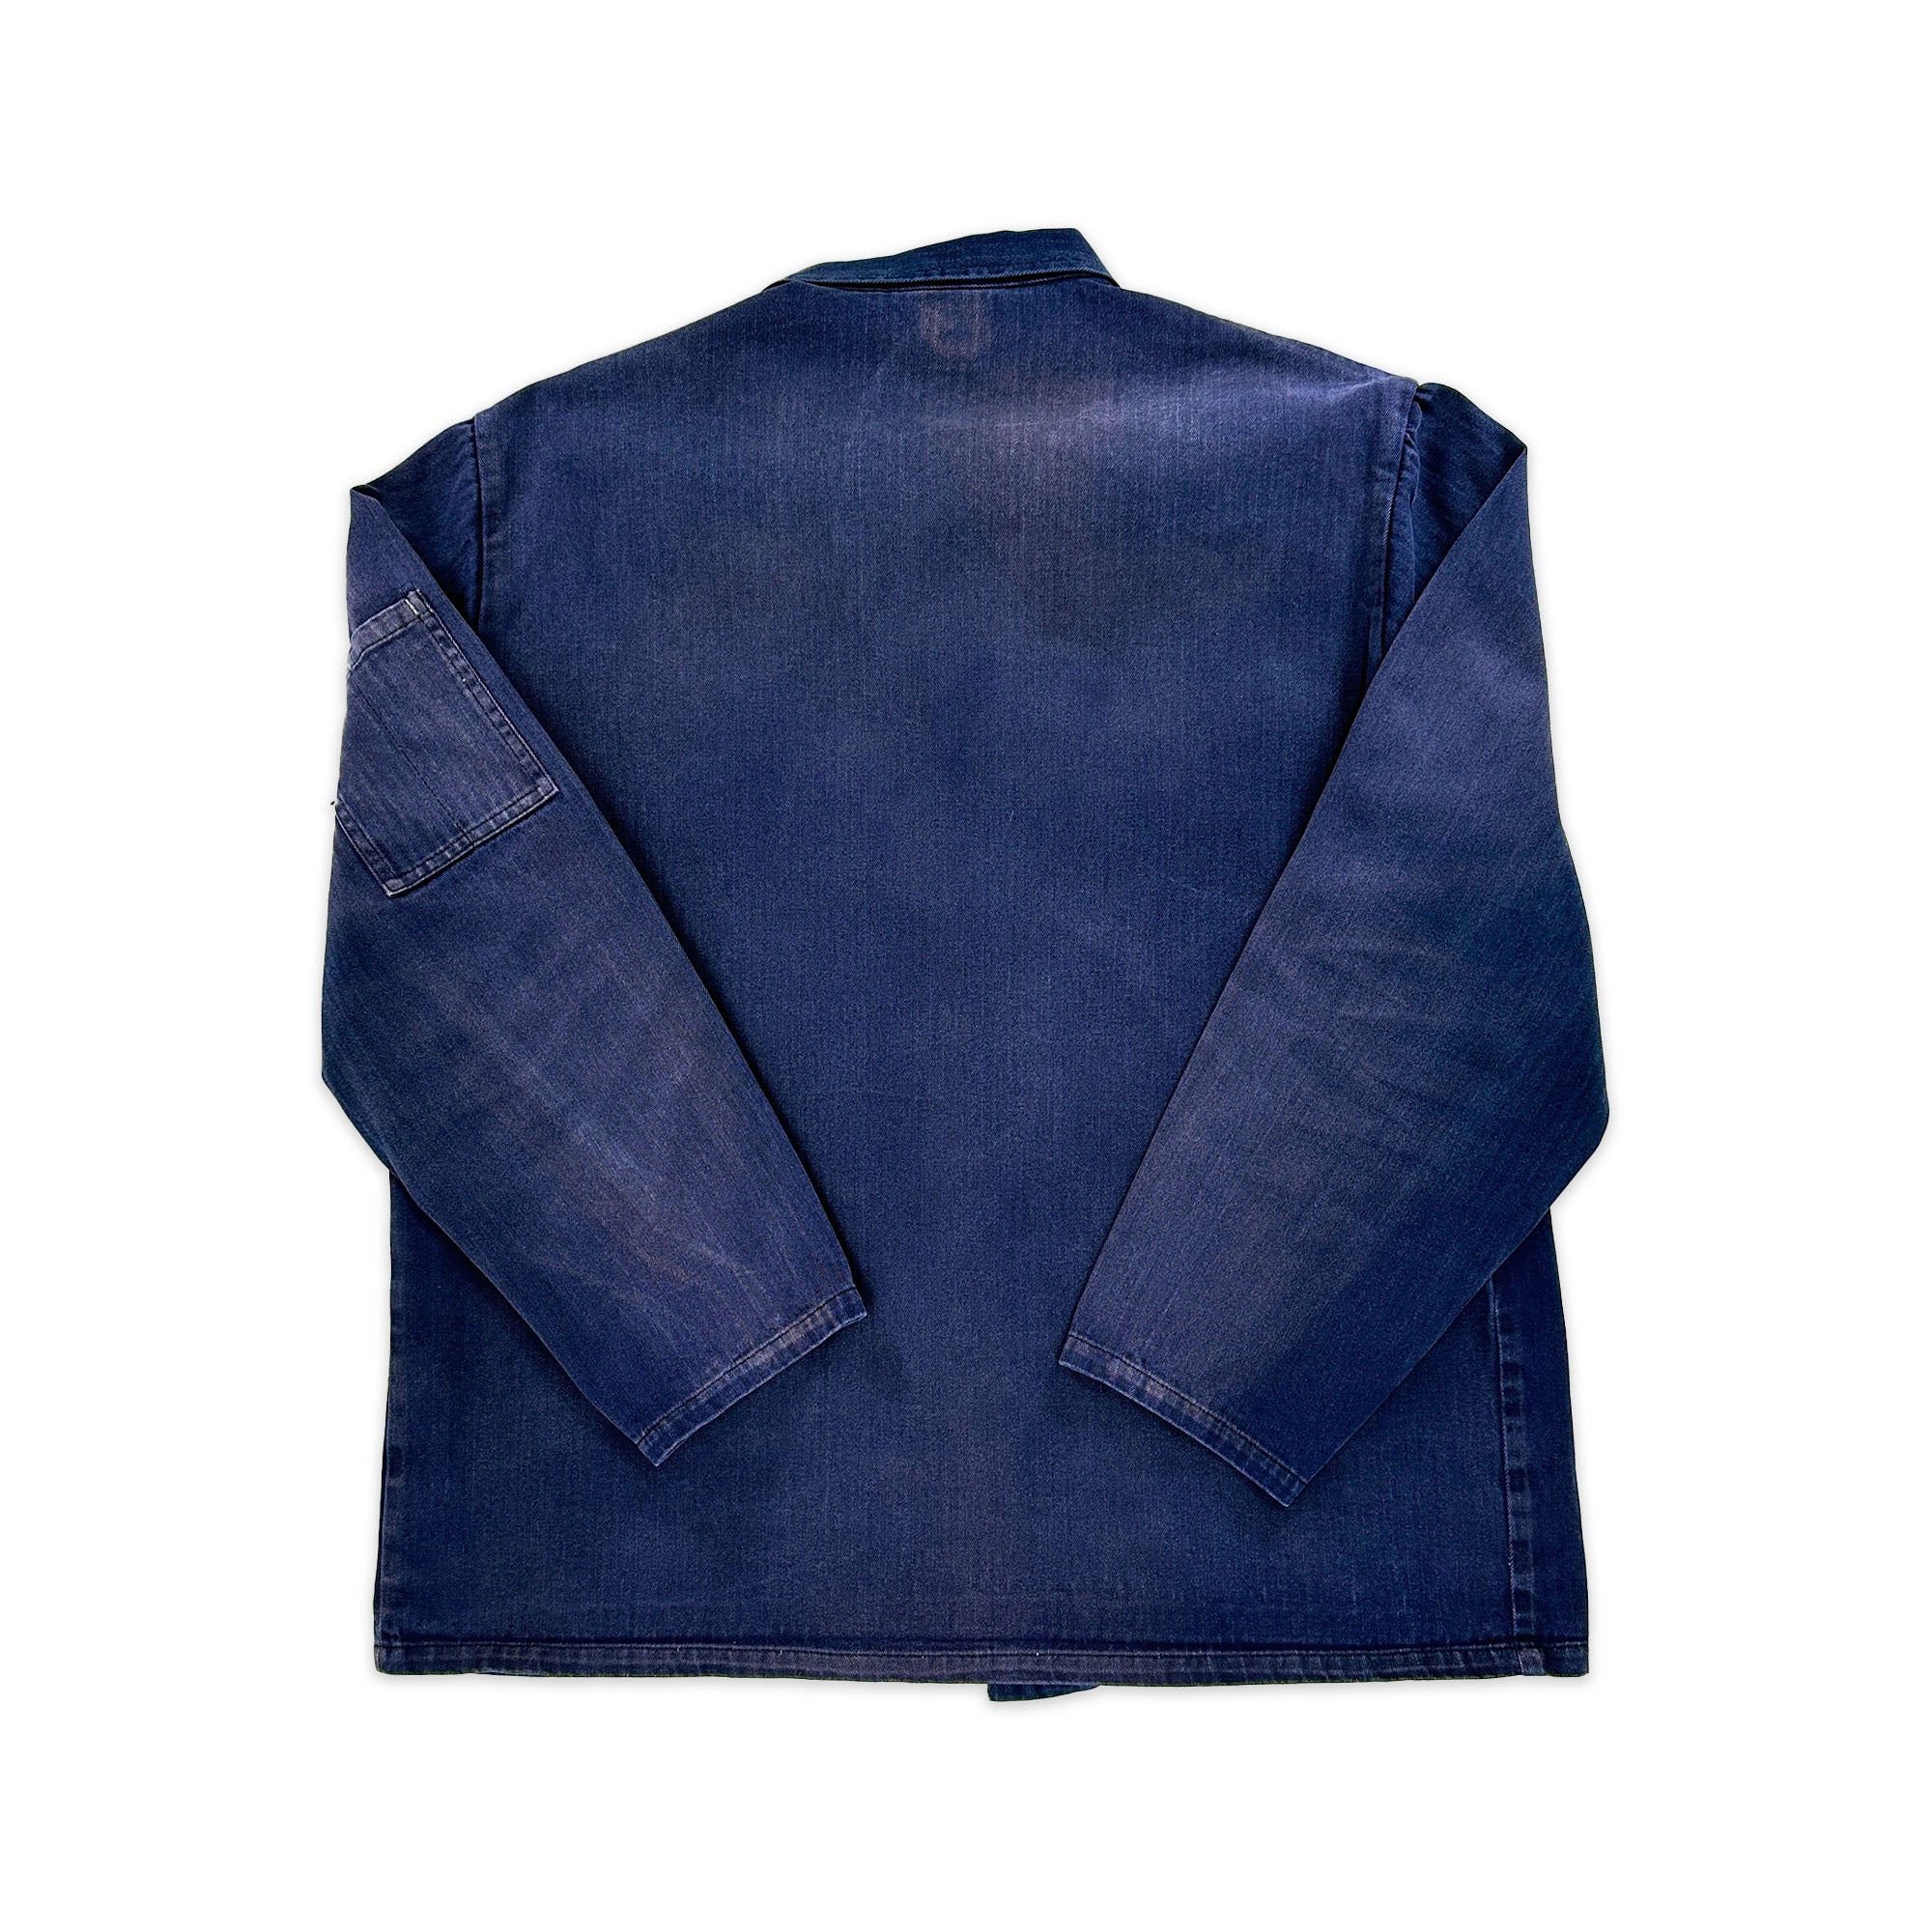 Vintage French Work Jacket - XL / 2XL - 0